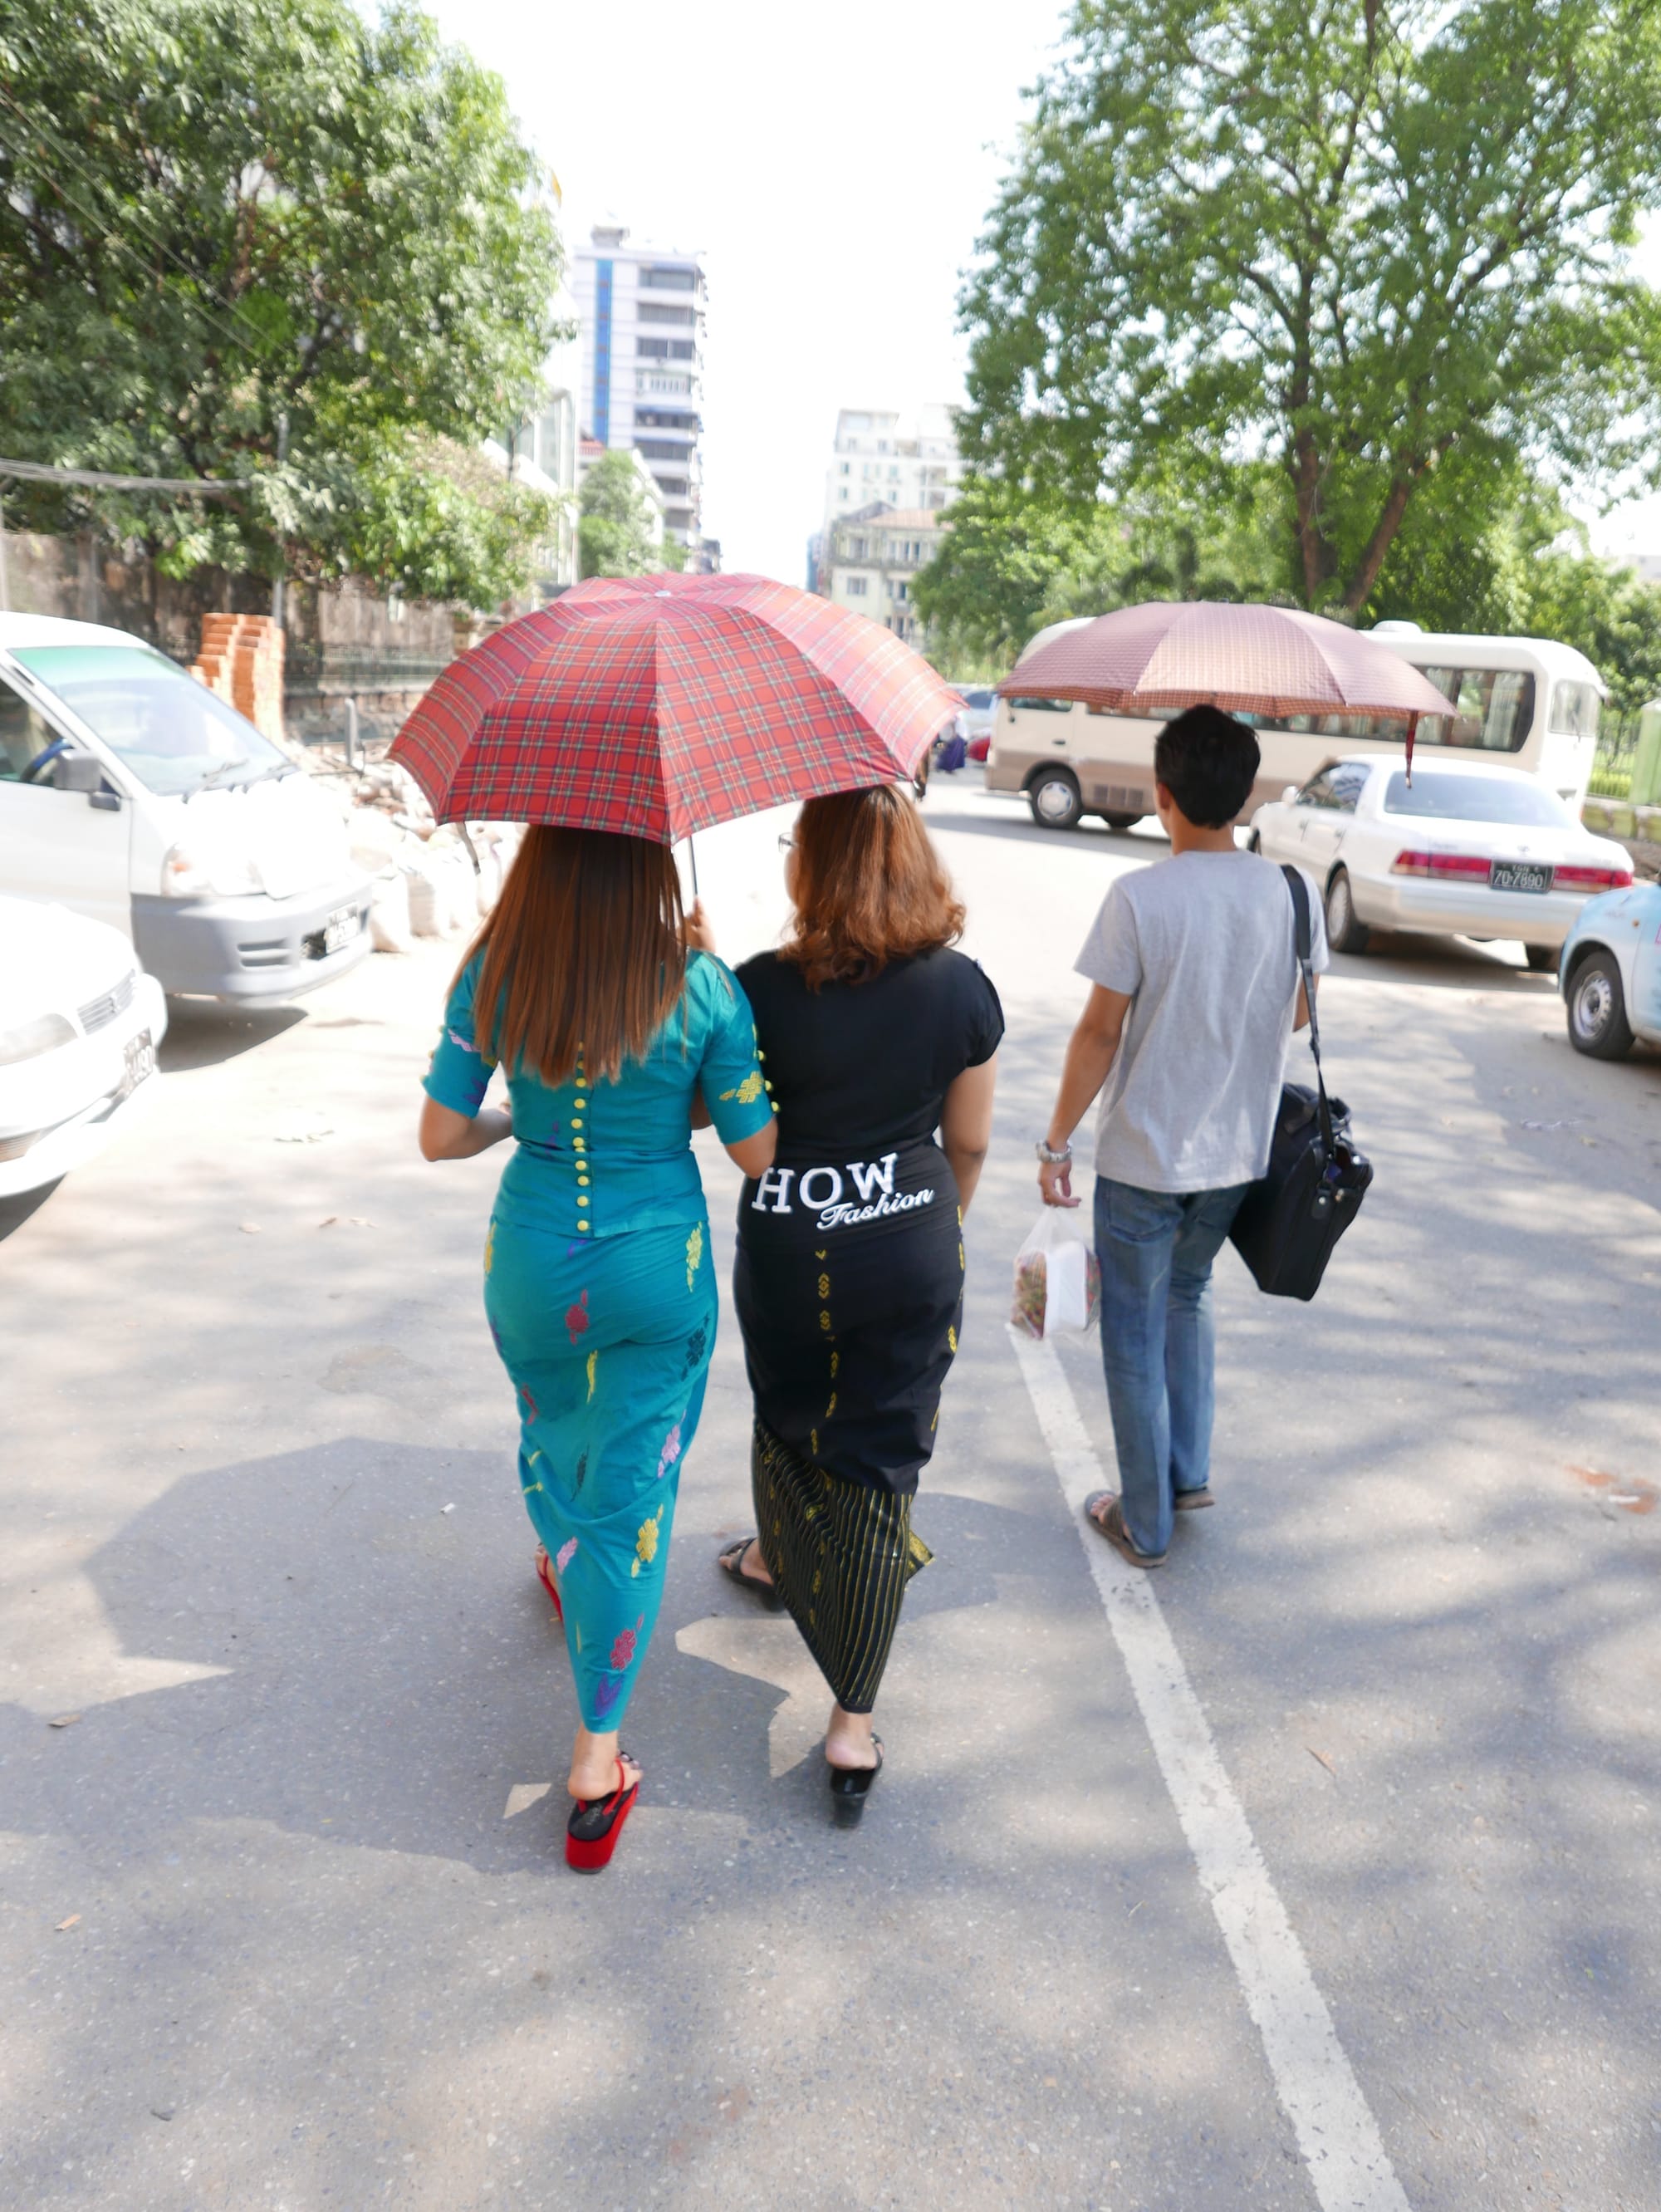 Photo by Author — umbrellas in the sun — Myanmar (Burma)